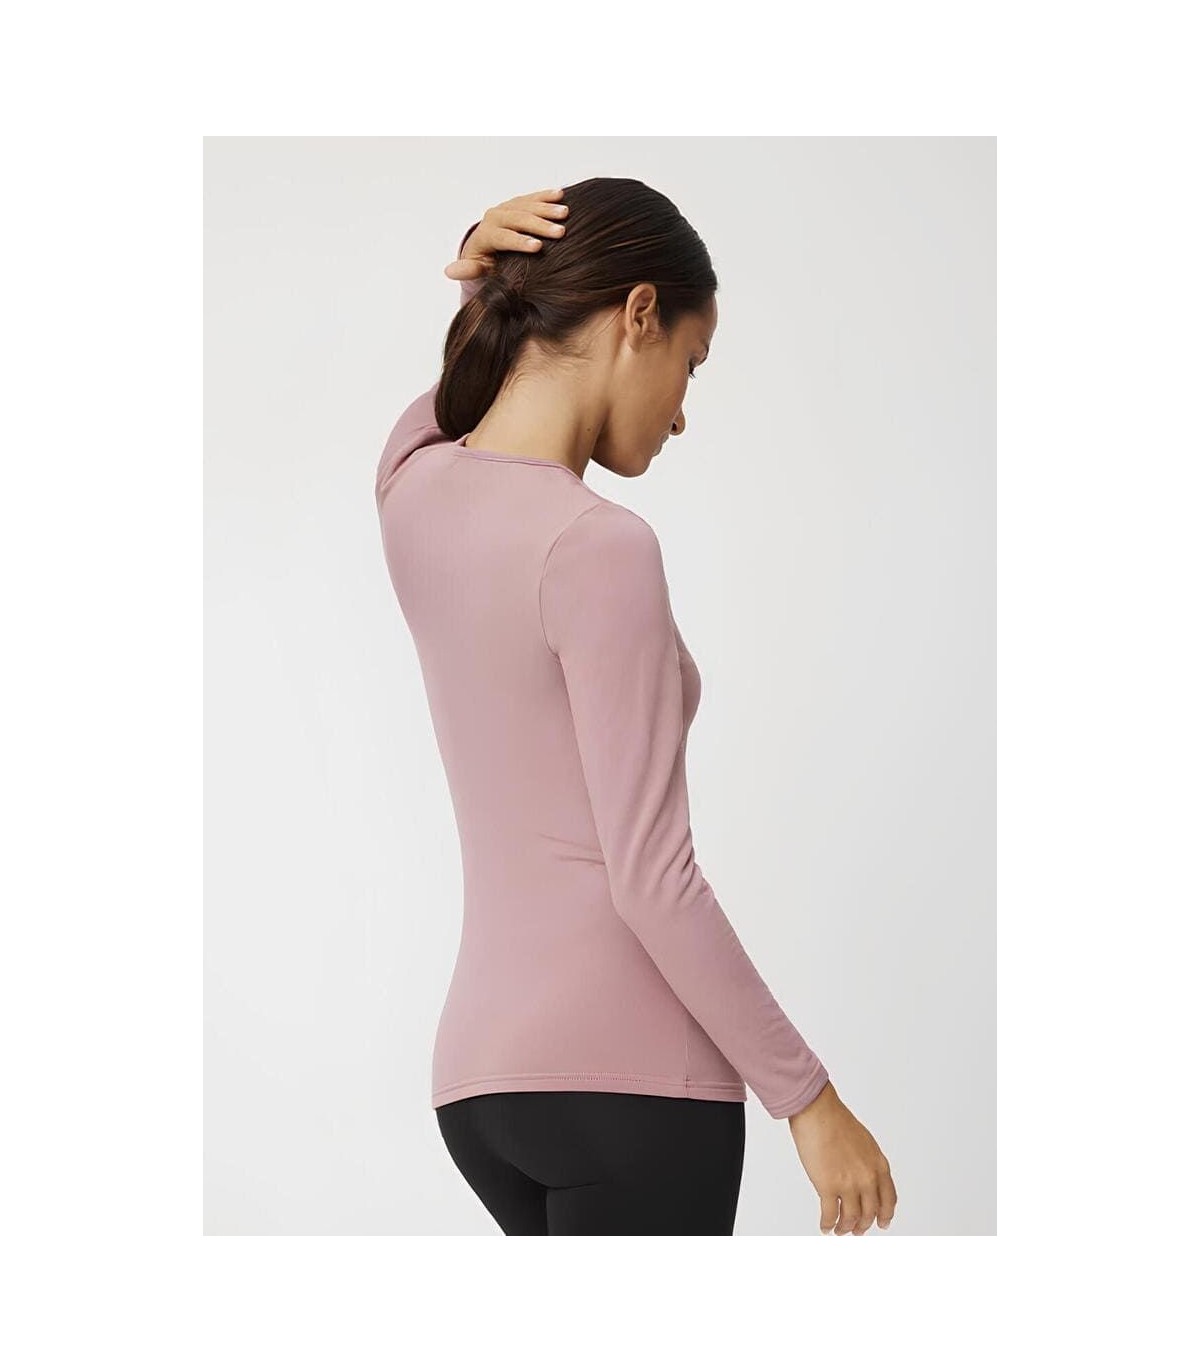 Camiseta Térmica Mujer Rosa 70015 Ysabel Mora - Elegancia y Calidez